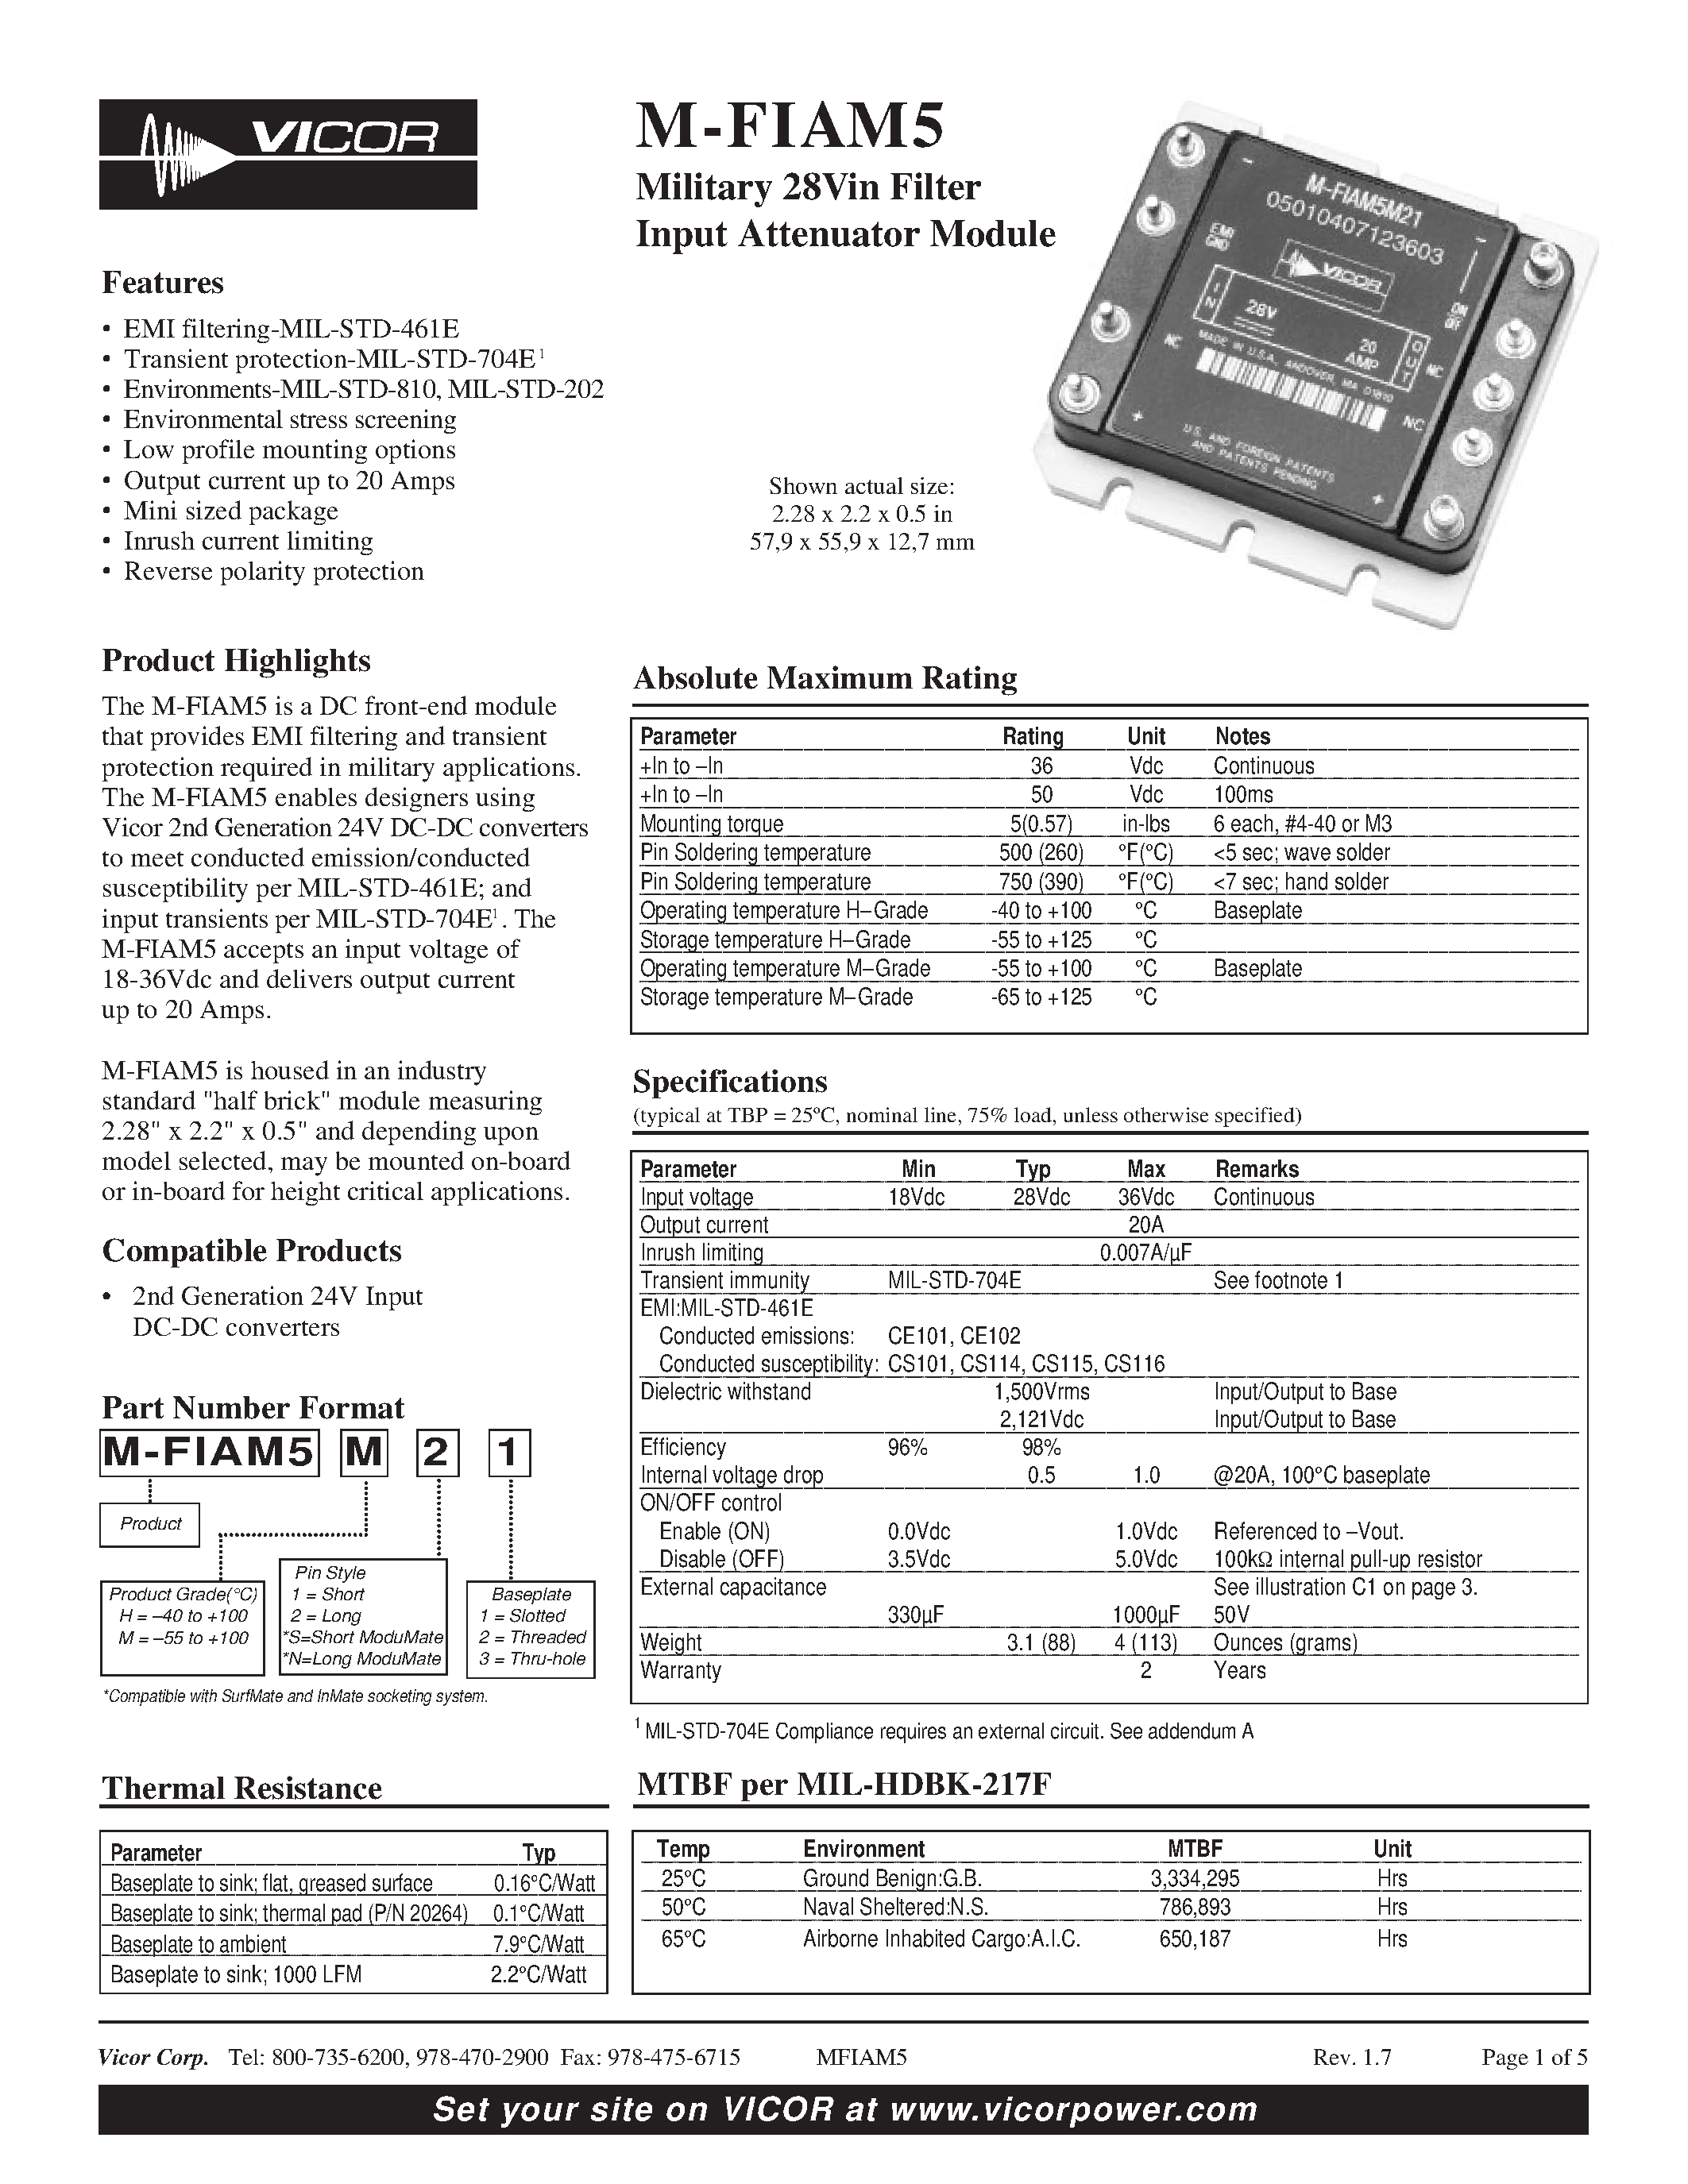 Datasheet M-FIAM5M22 - Military 28Vin Filter Input Attenuator Module page 1